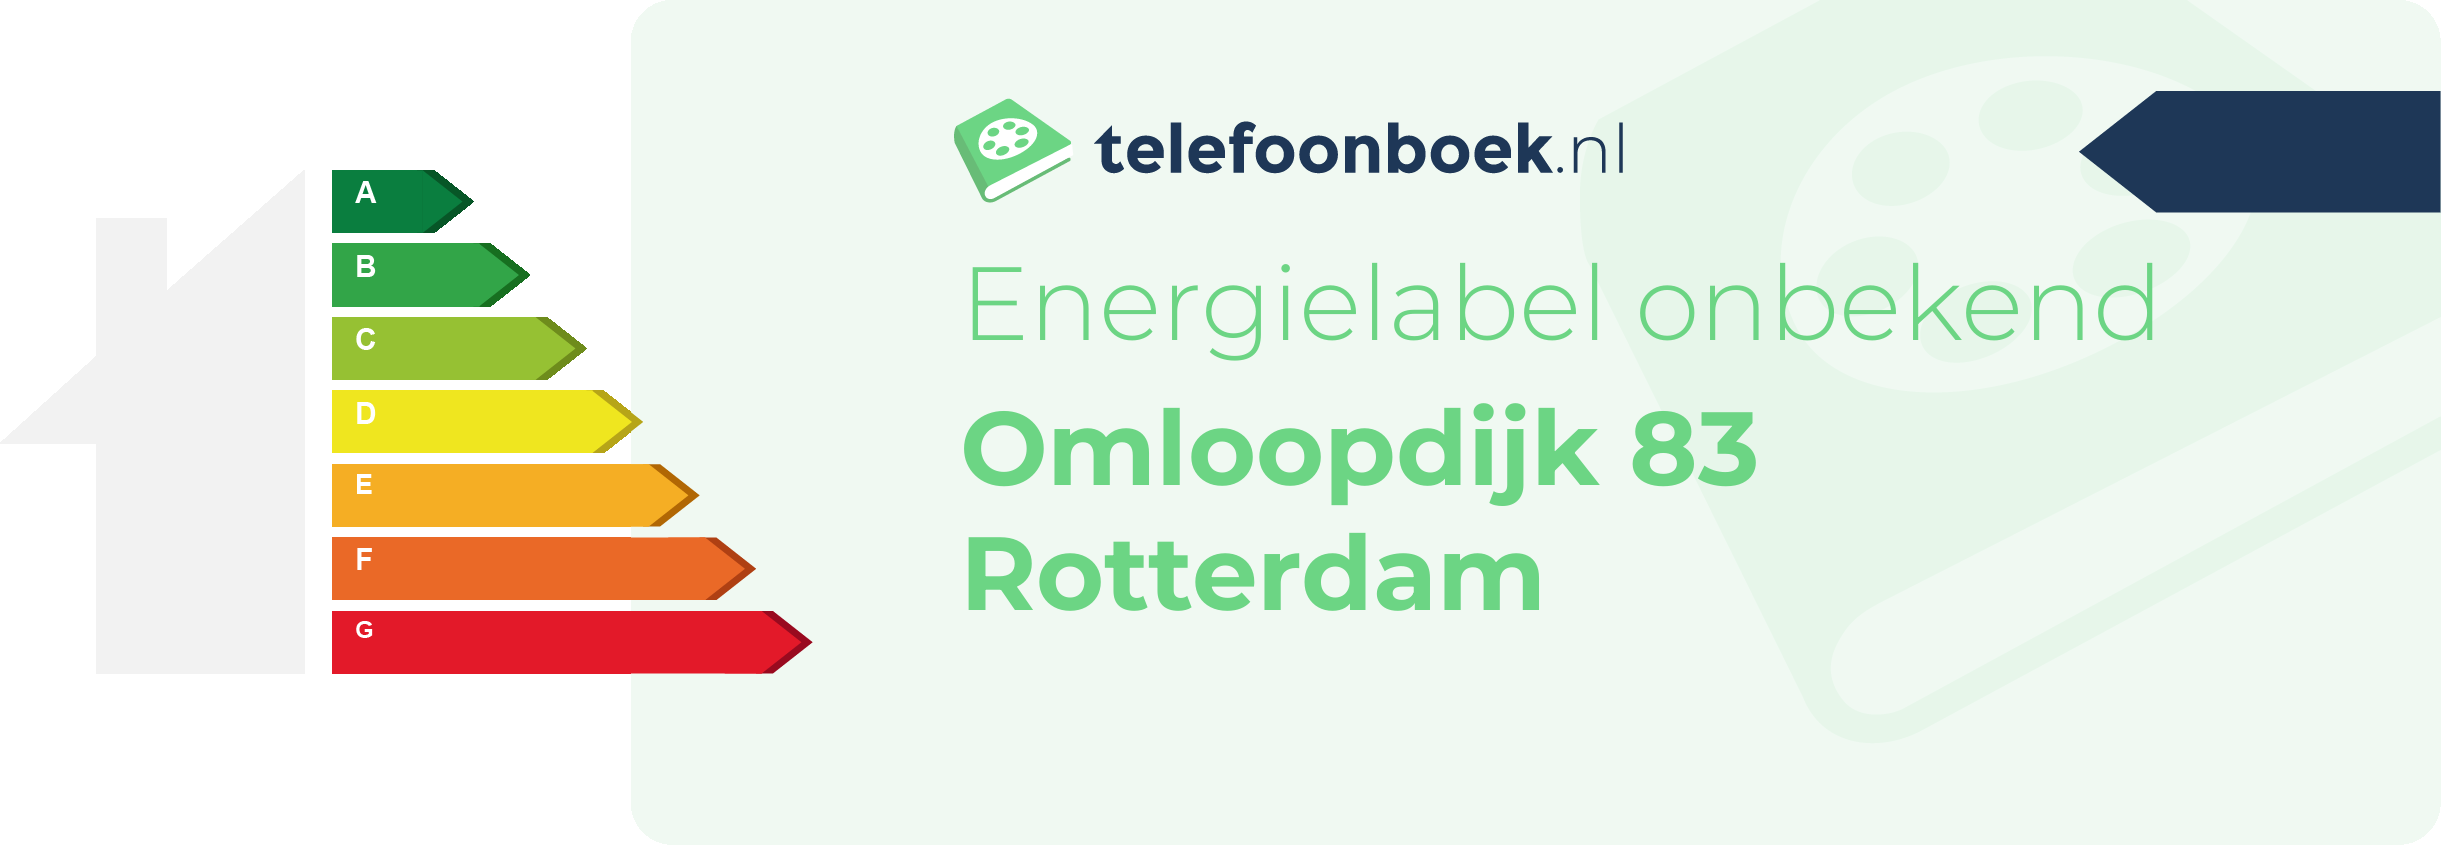 Energielabel Omloopdijk 83 Rotterdam